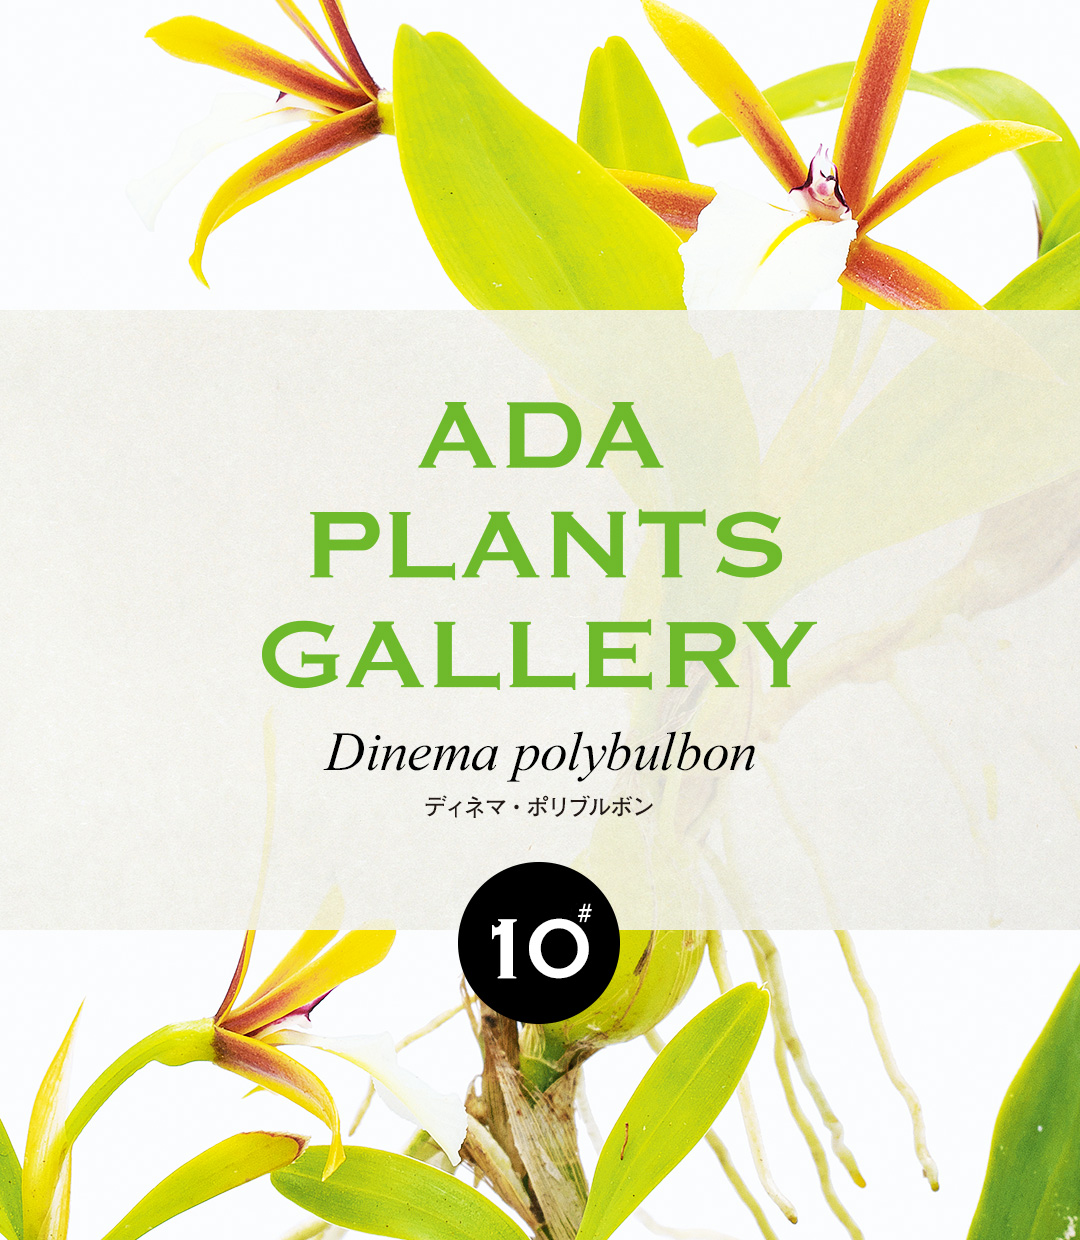 ADA PLANTS GALLERY #10 「ディネマ・ポリブルボン」